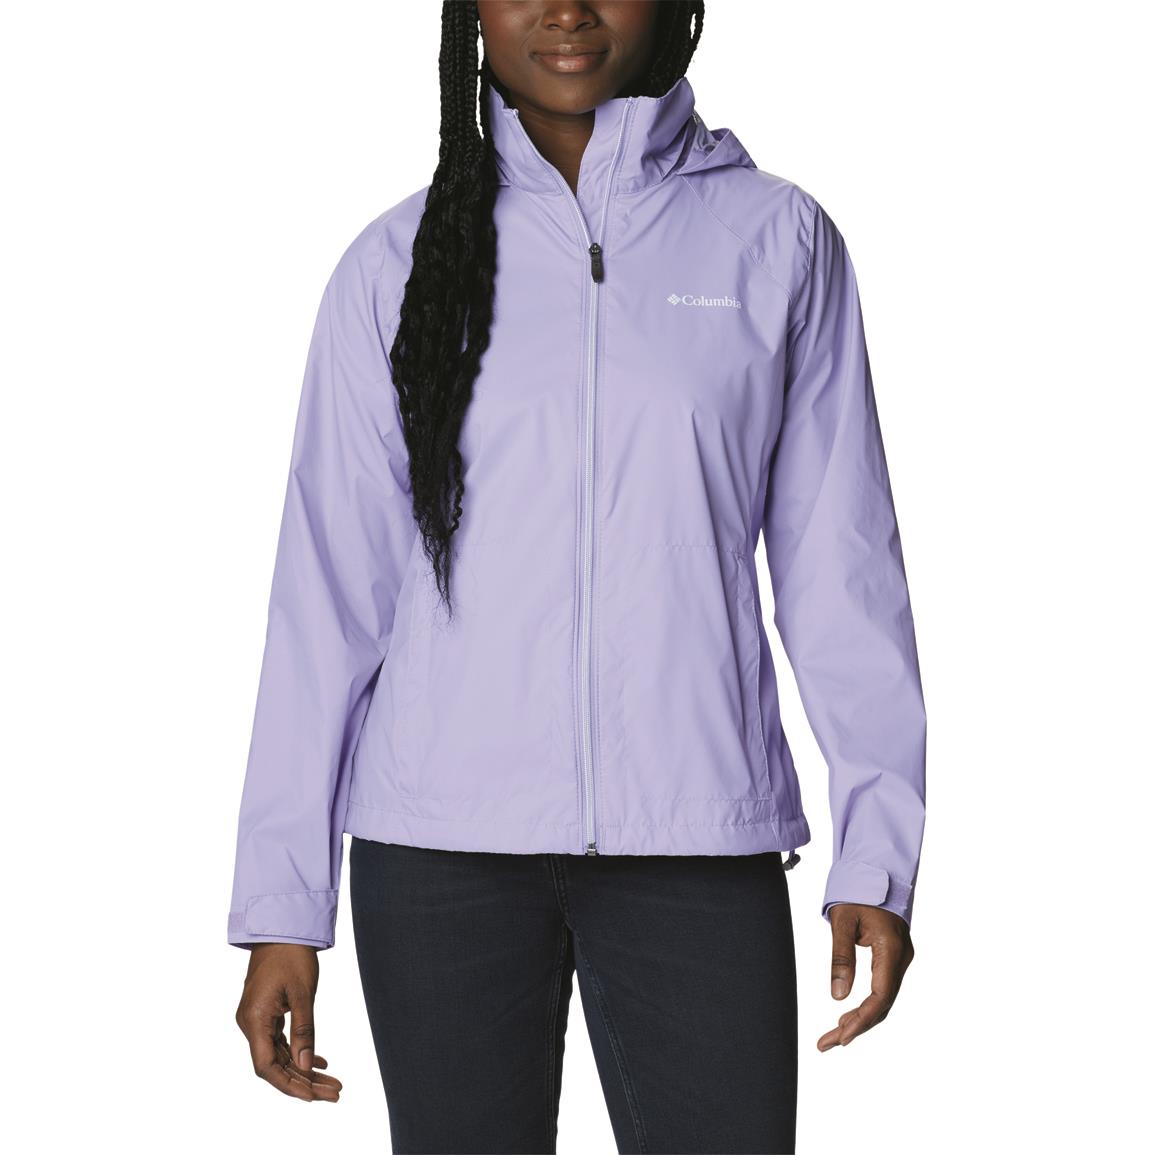 Columbia Women's Switchback III Waterproof Jacket, Frosted Purple